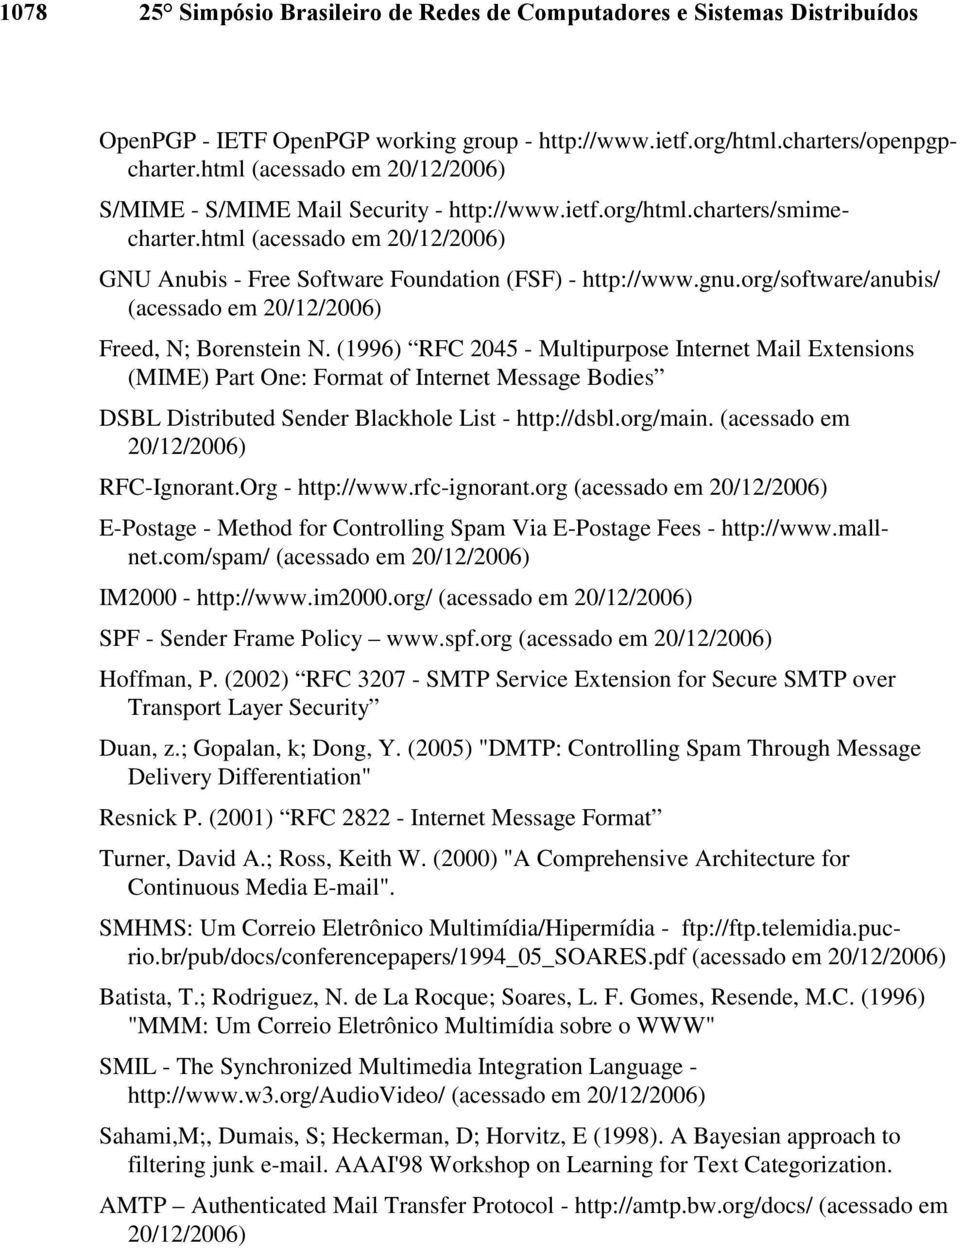 (1996) RFC 2045 - Multipurpose Internet Mail Extensions (MIME) Part One: Format of Internet Message Bodies DSBL Distributed Sender Blackhole List - http://dsbl.org/main.